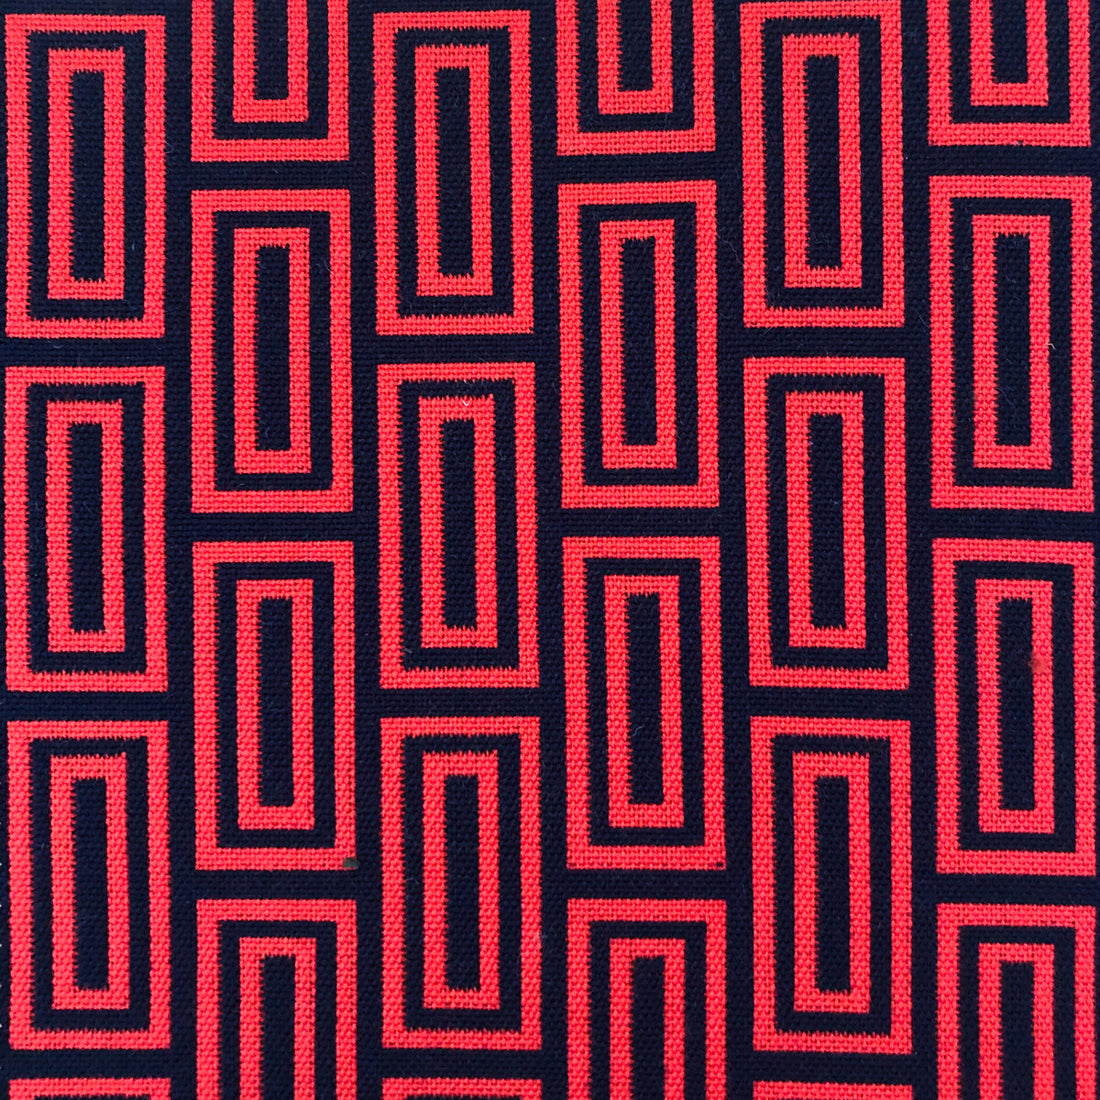 Caleb fabric in rojo/navy color - pattern LCT1056.005.0 - by Gaston y Daniela in the Lorenzo Castillo VI collection